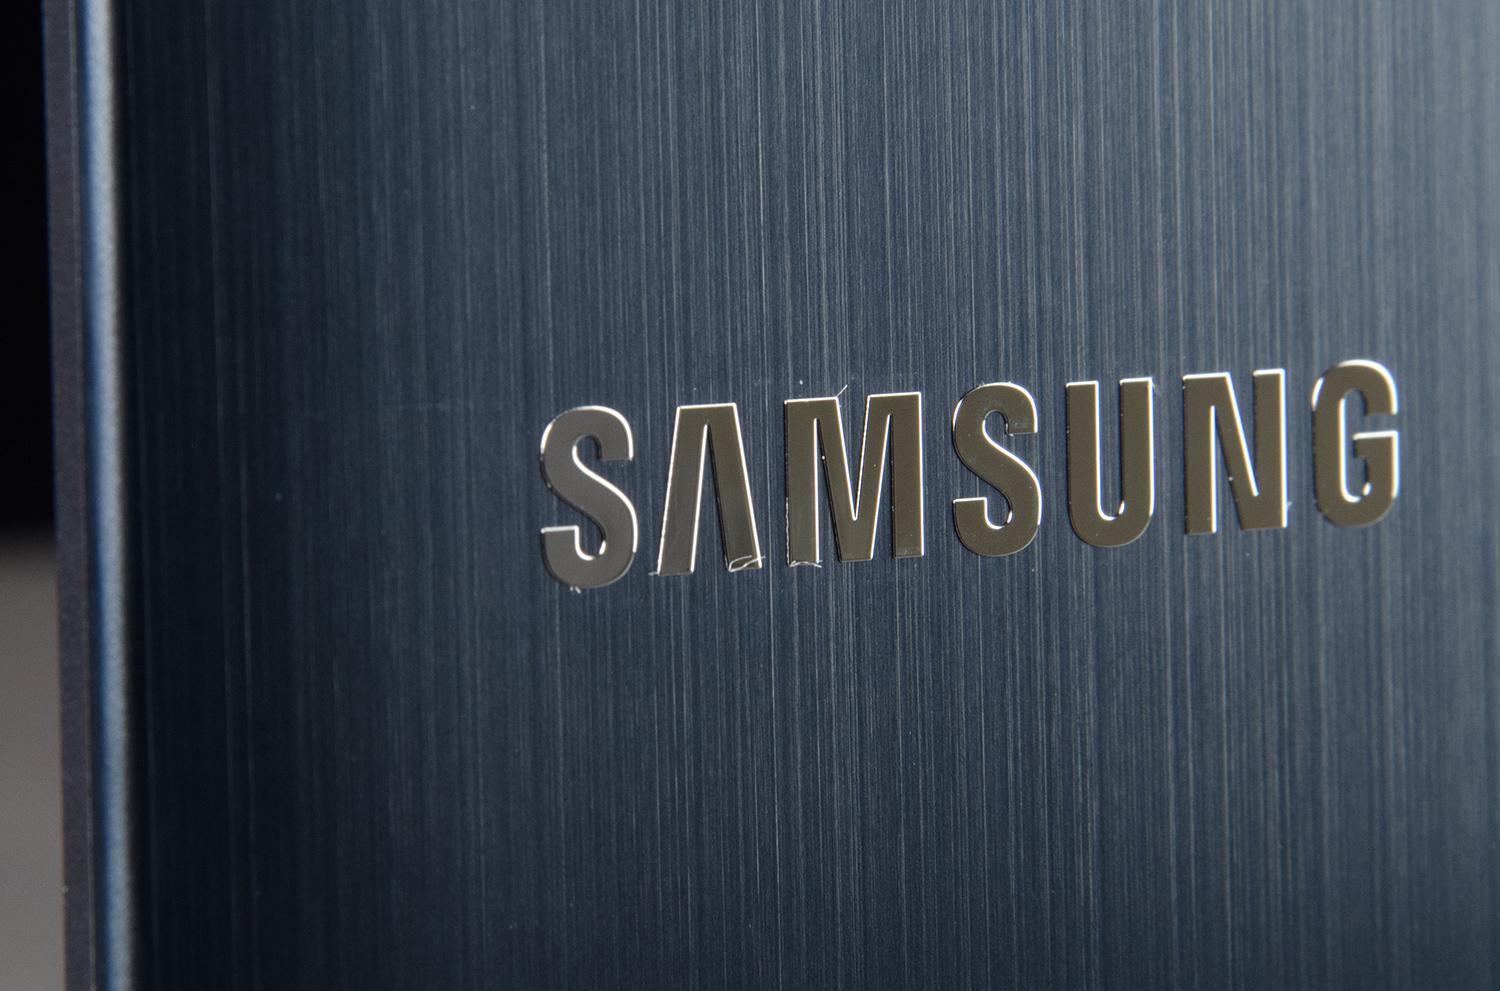 2013 Samsung Logo - Samsung Gear brand name revealed in trademark filing | Digital Trends